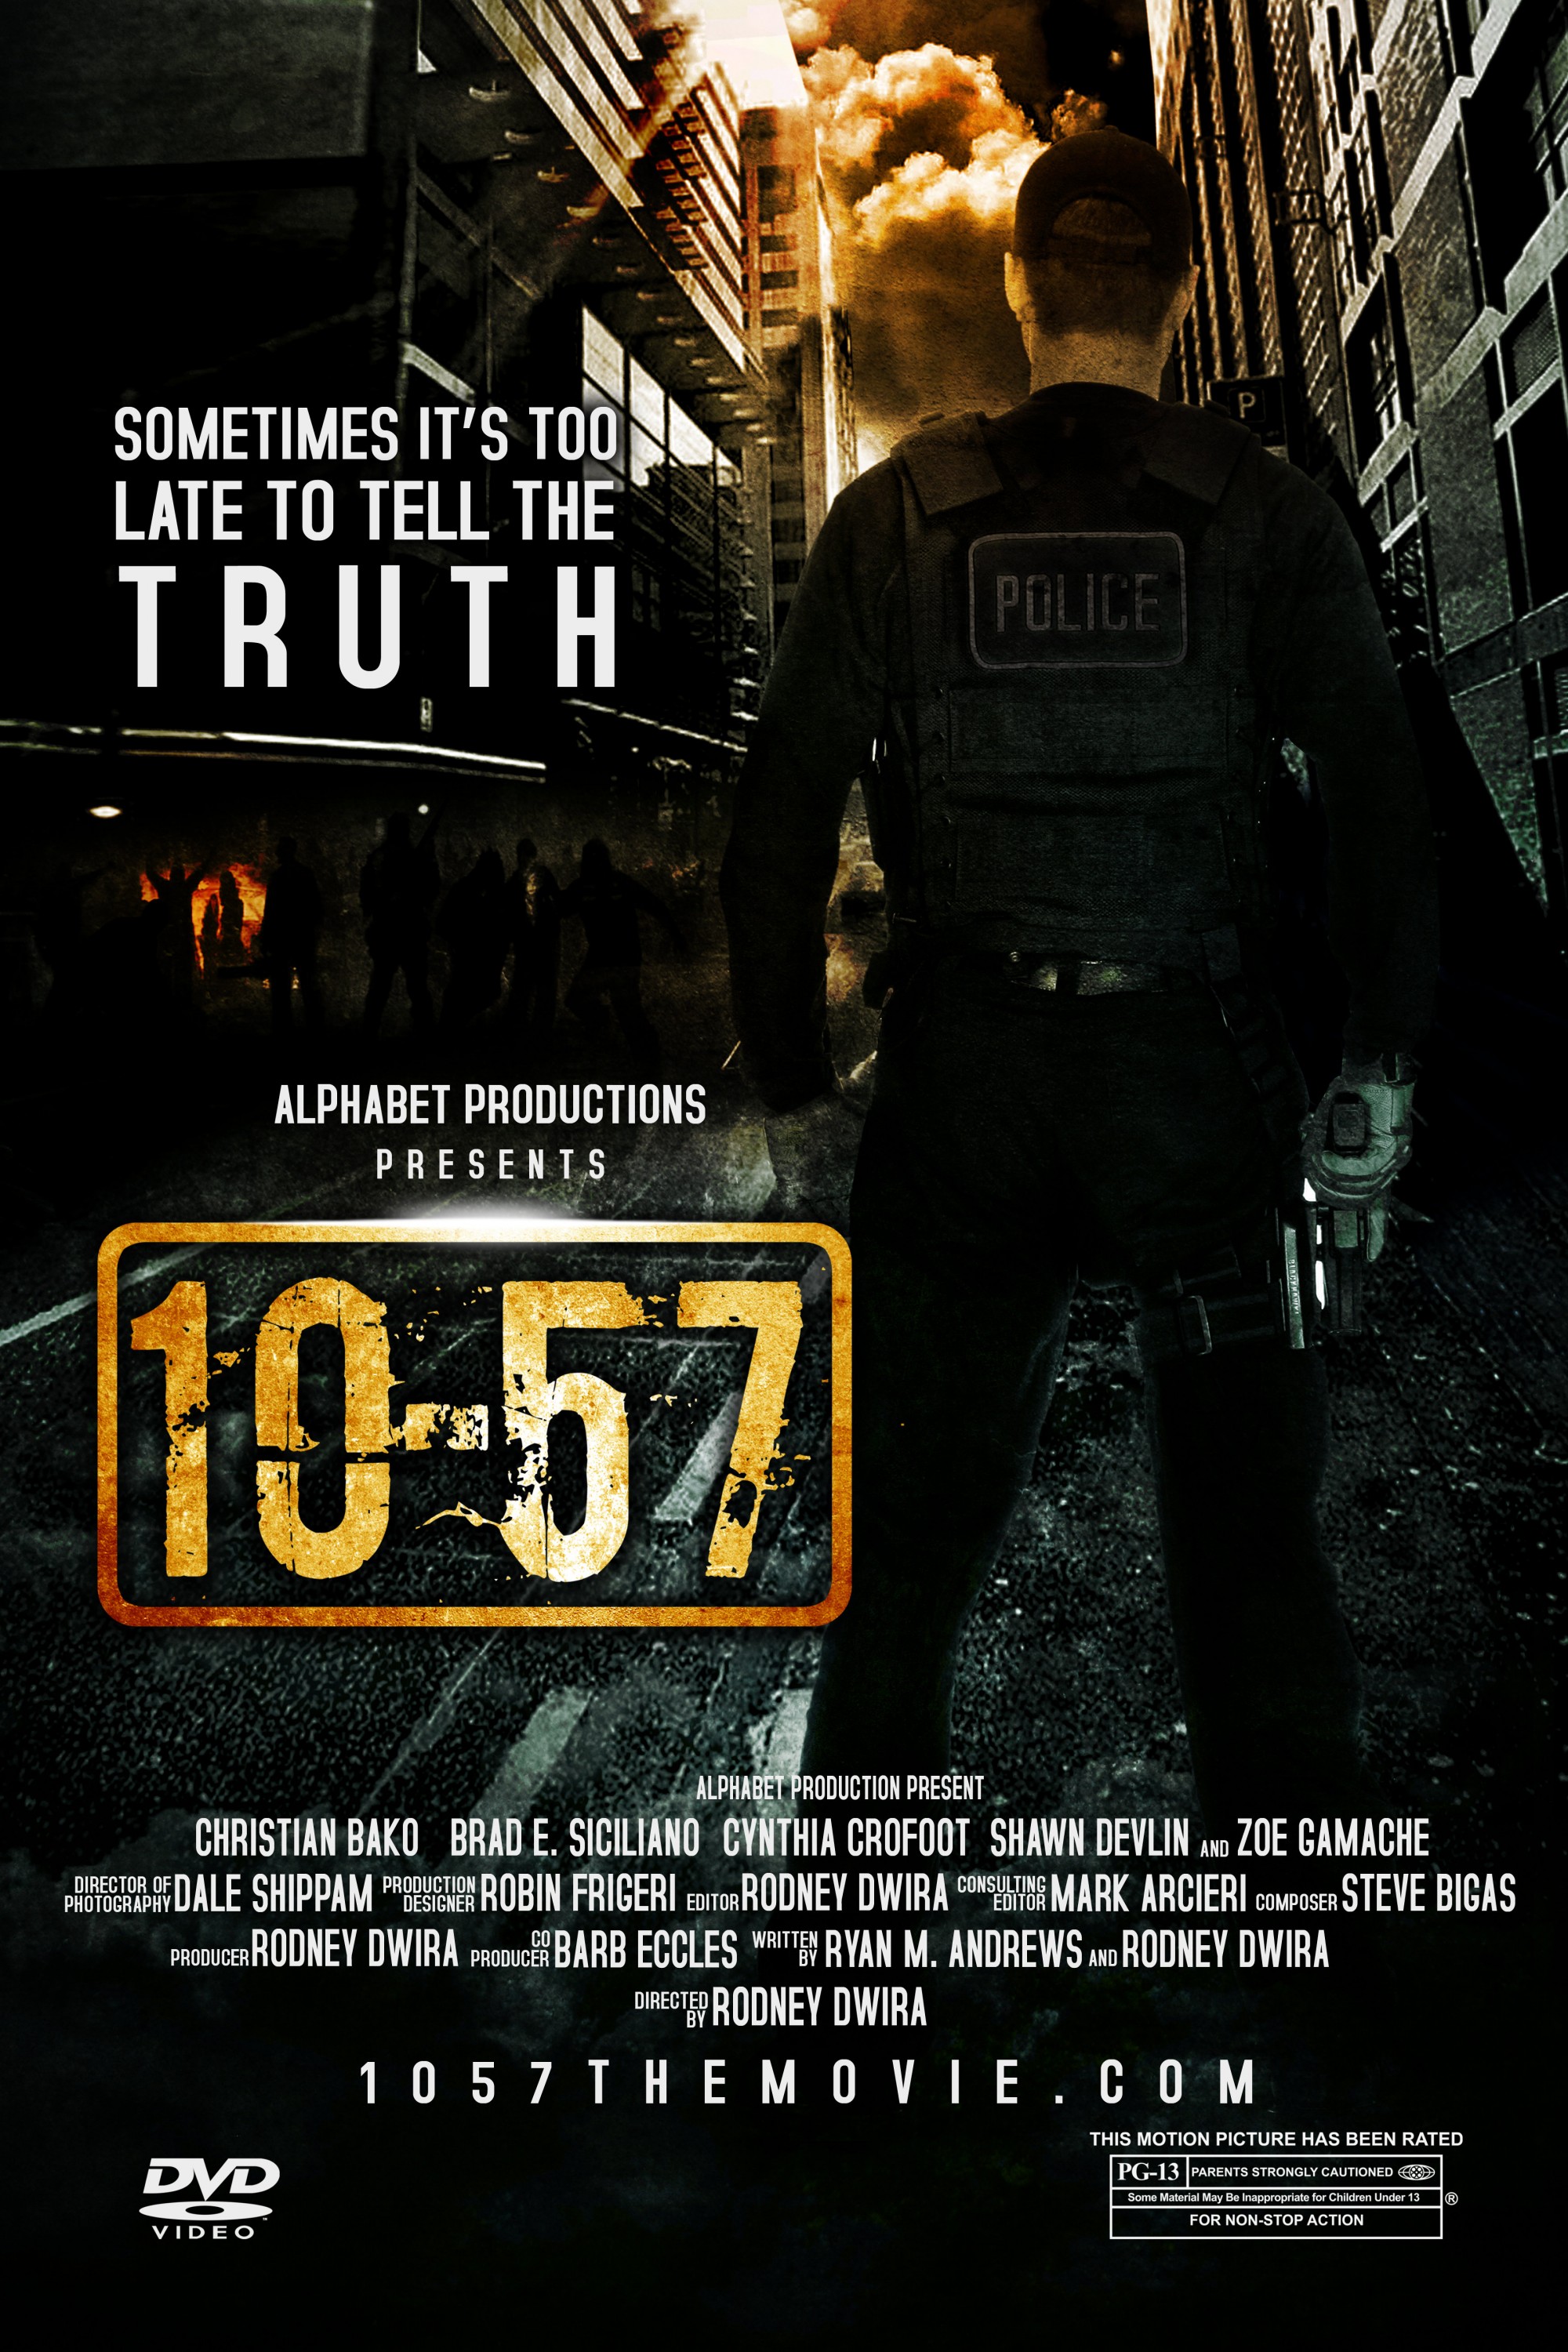 Mega Sized Movie Poster Image for 10-57 